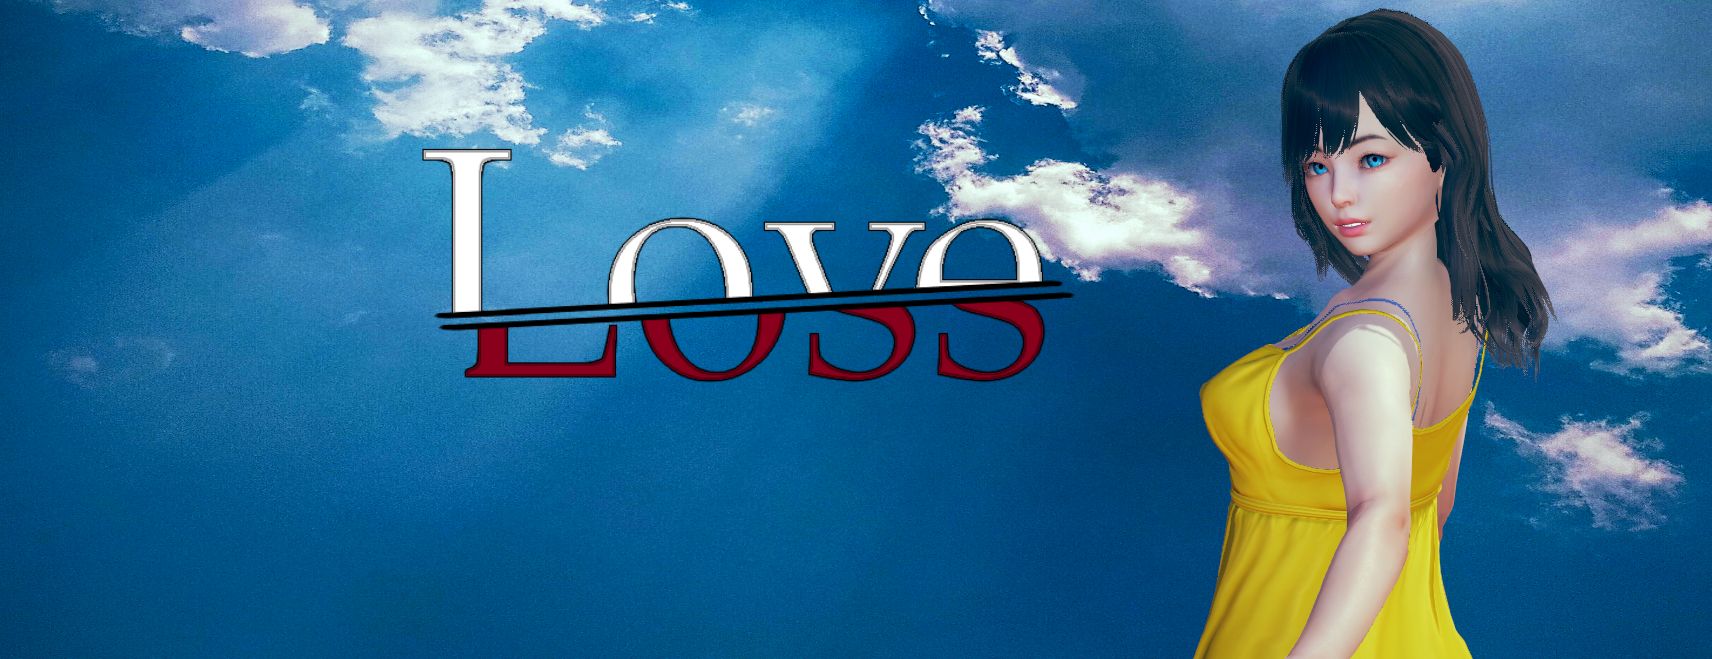 Love/Loss poster